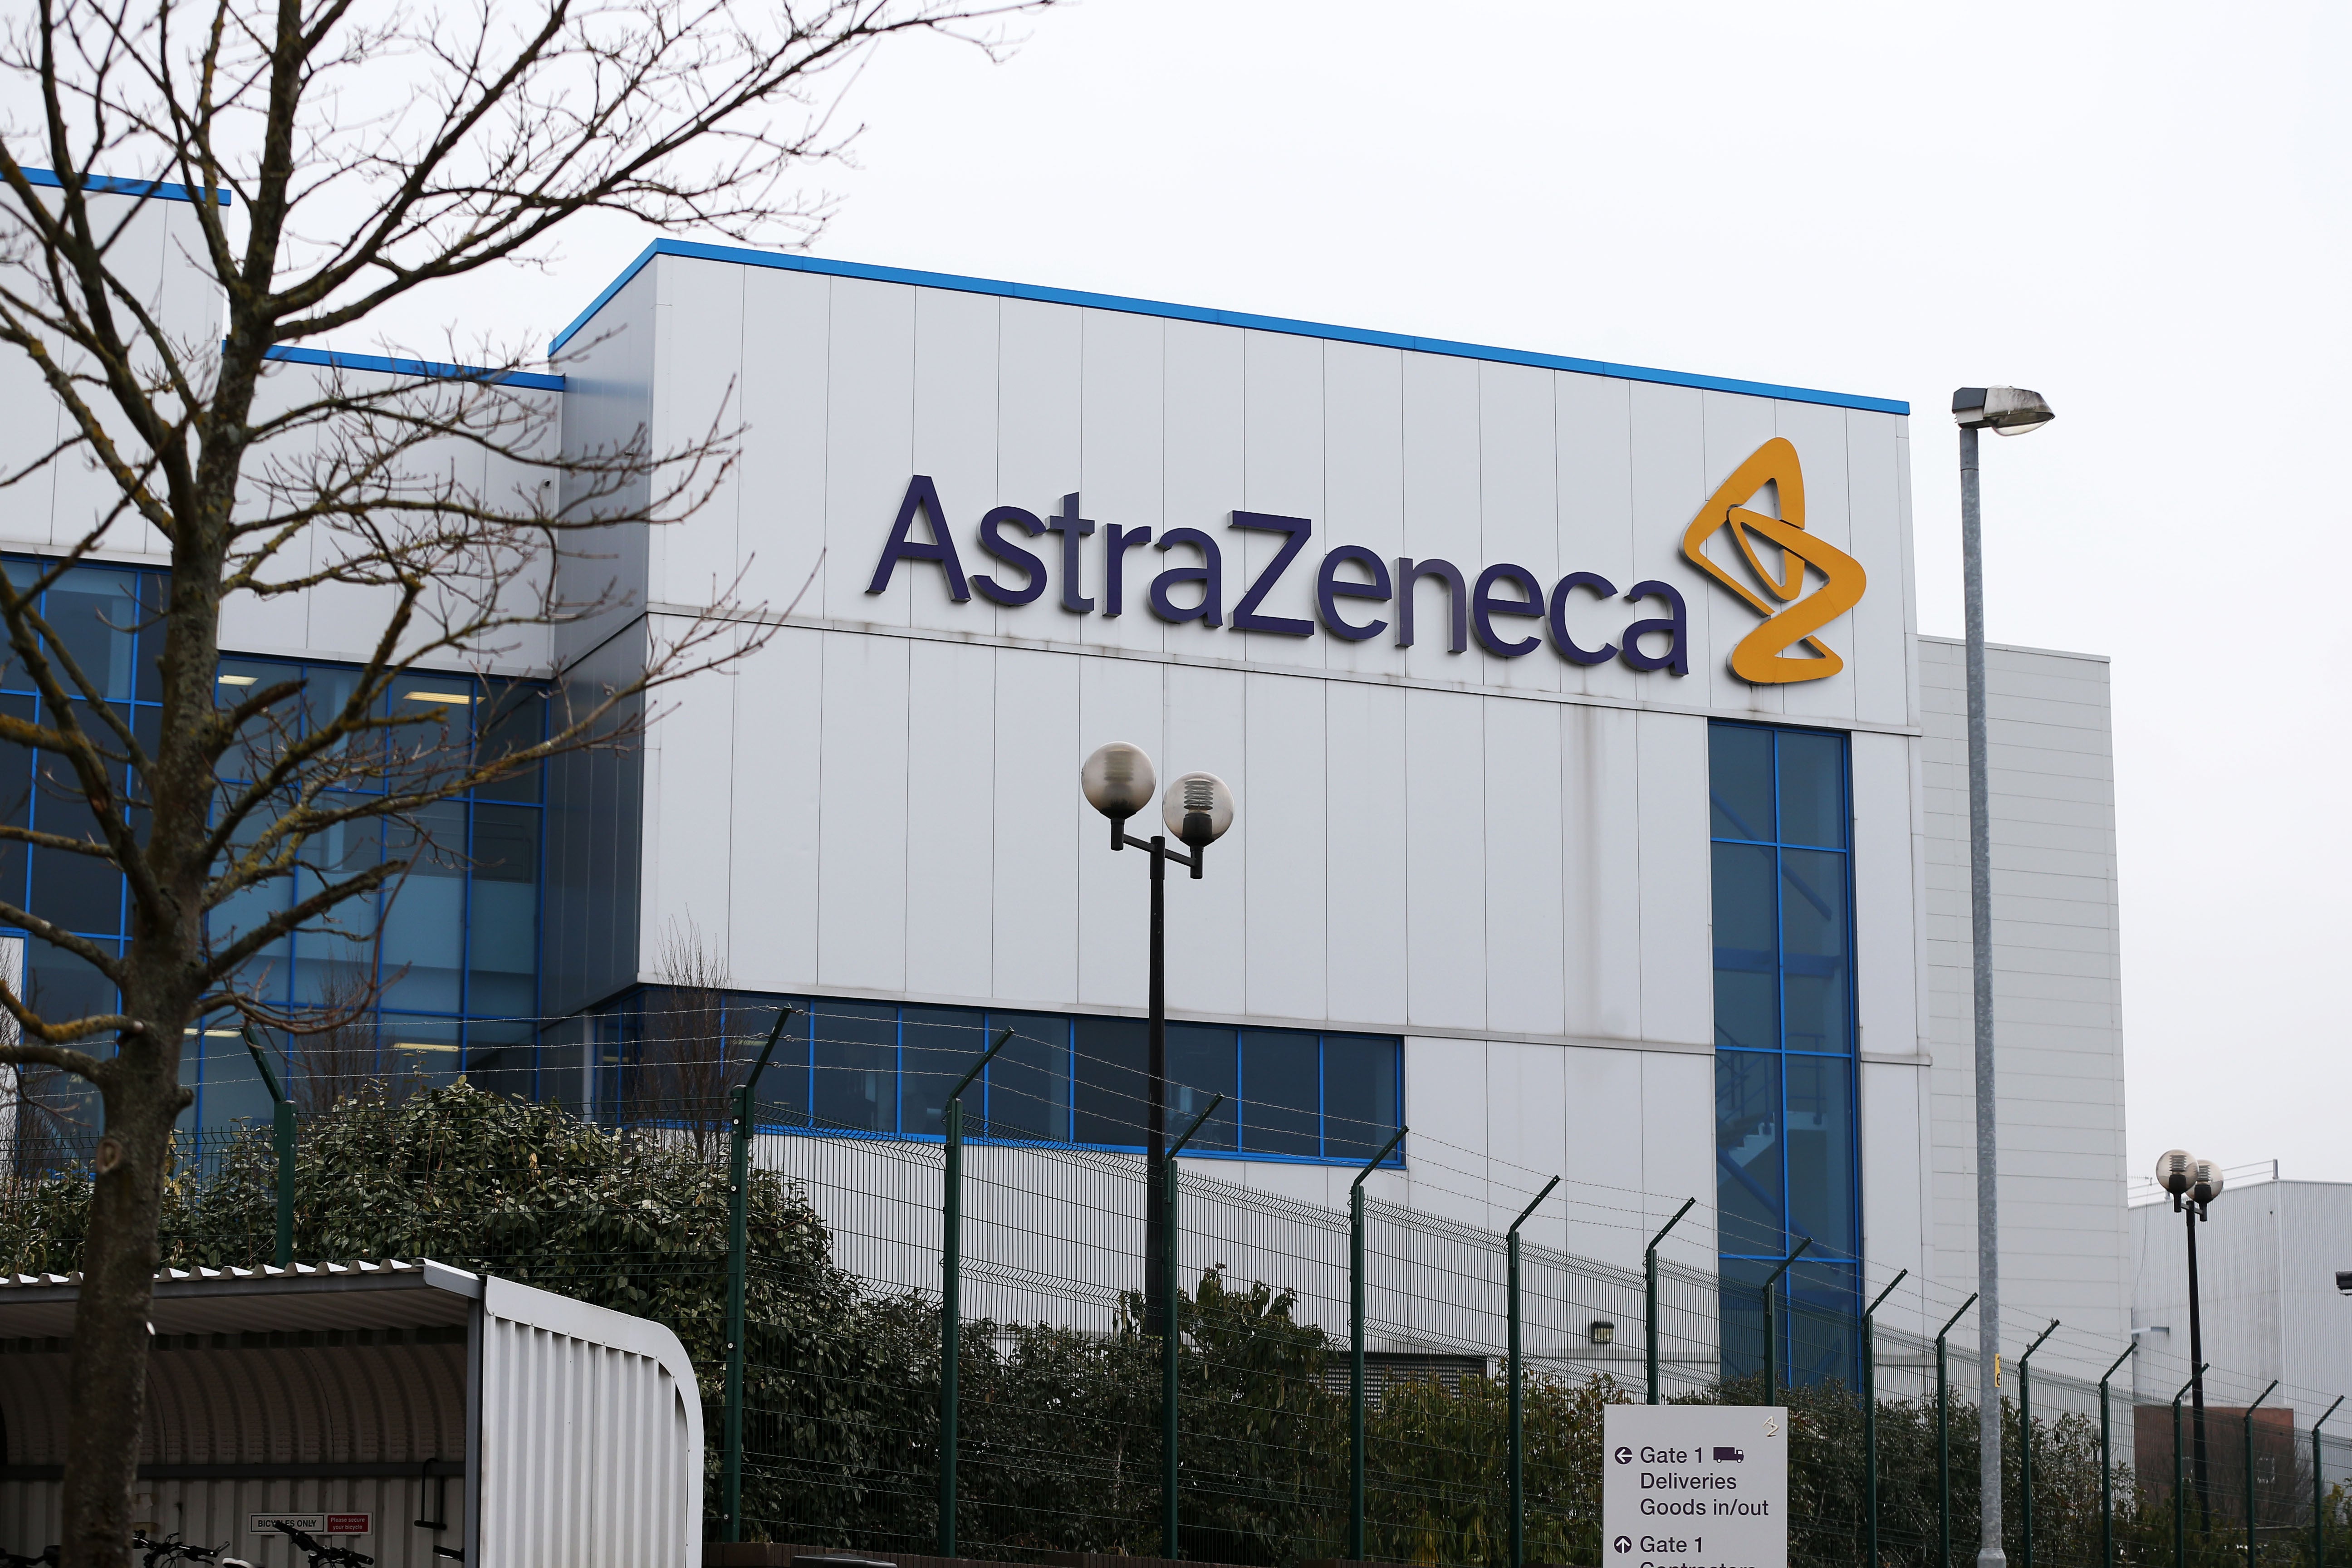 An AstraZeneca building